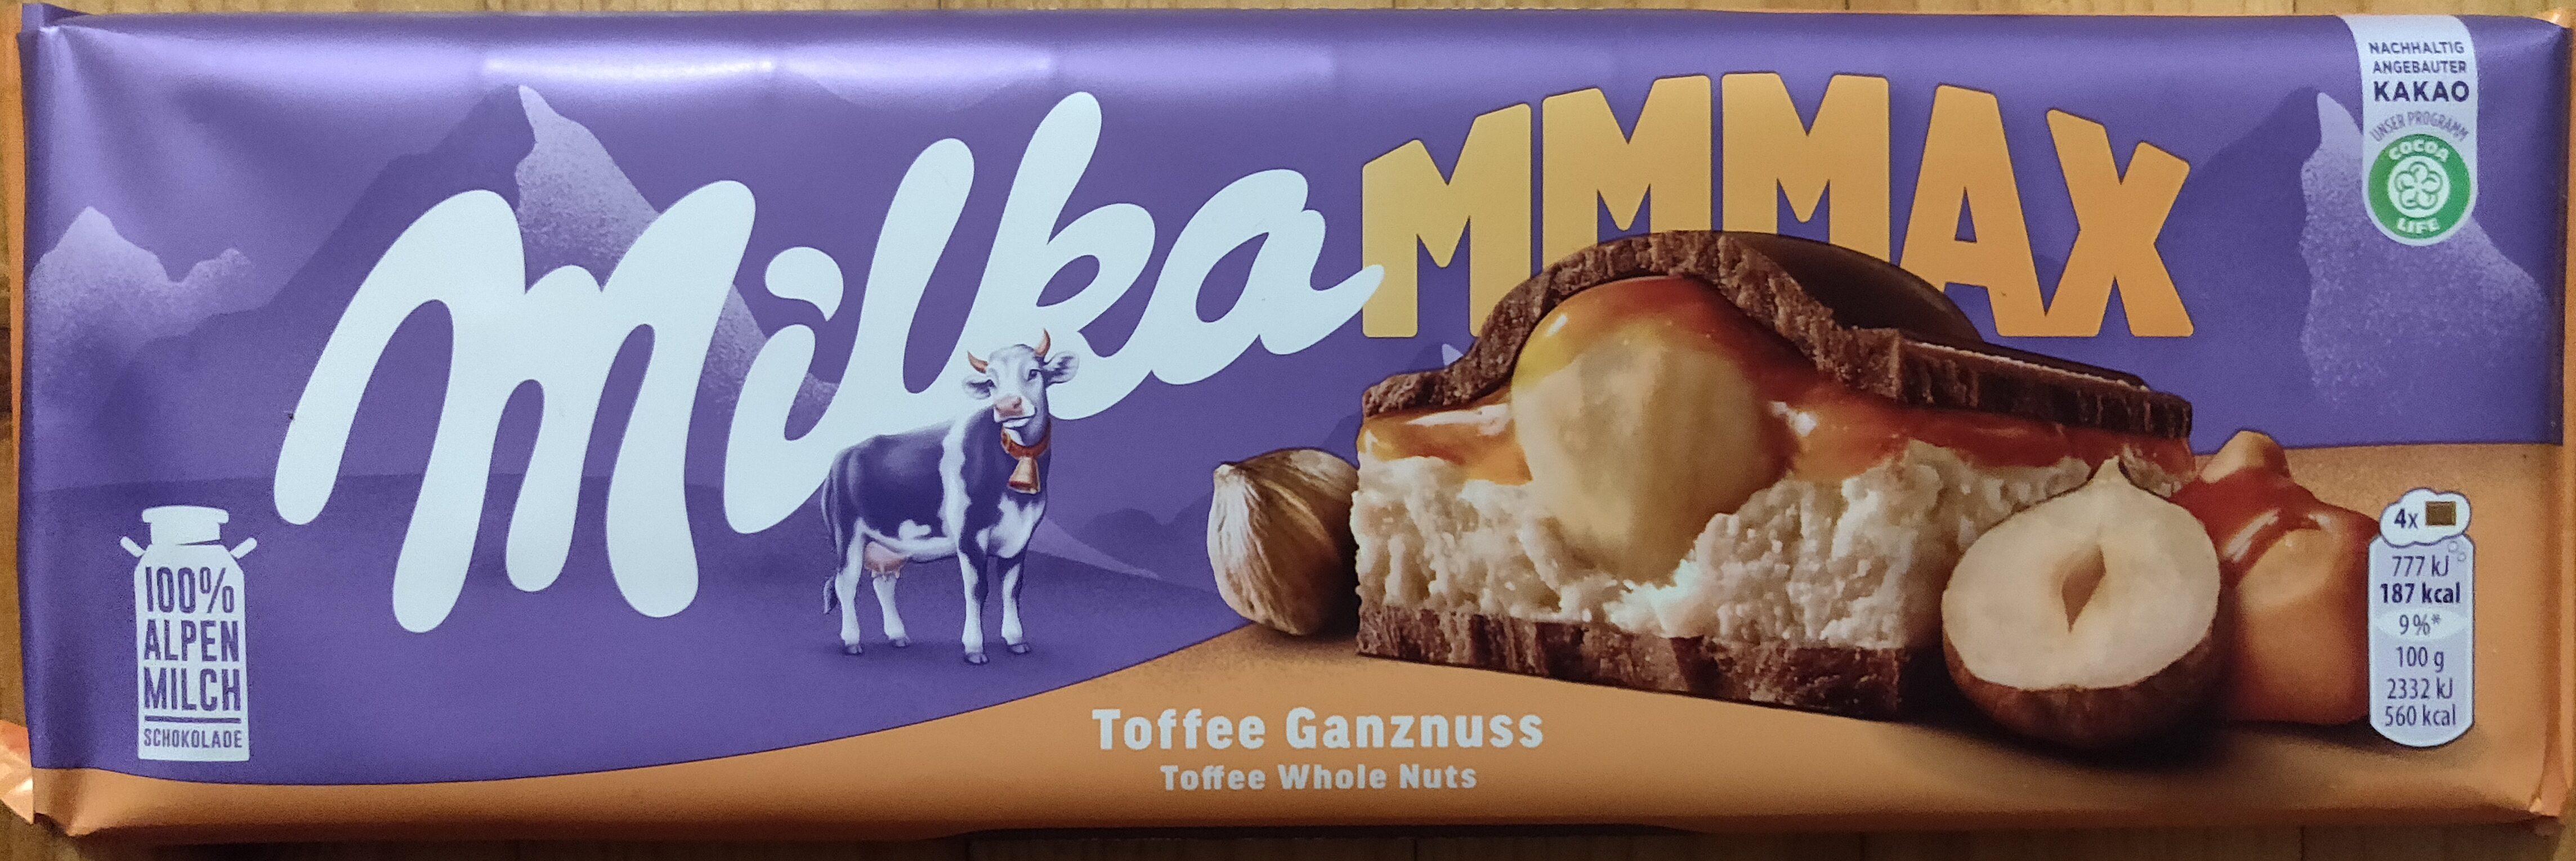 Toffee Ganznuss - Product - de